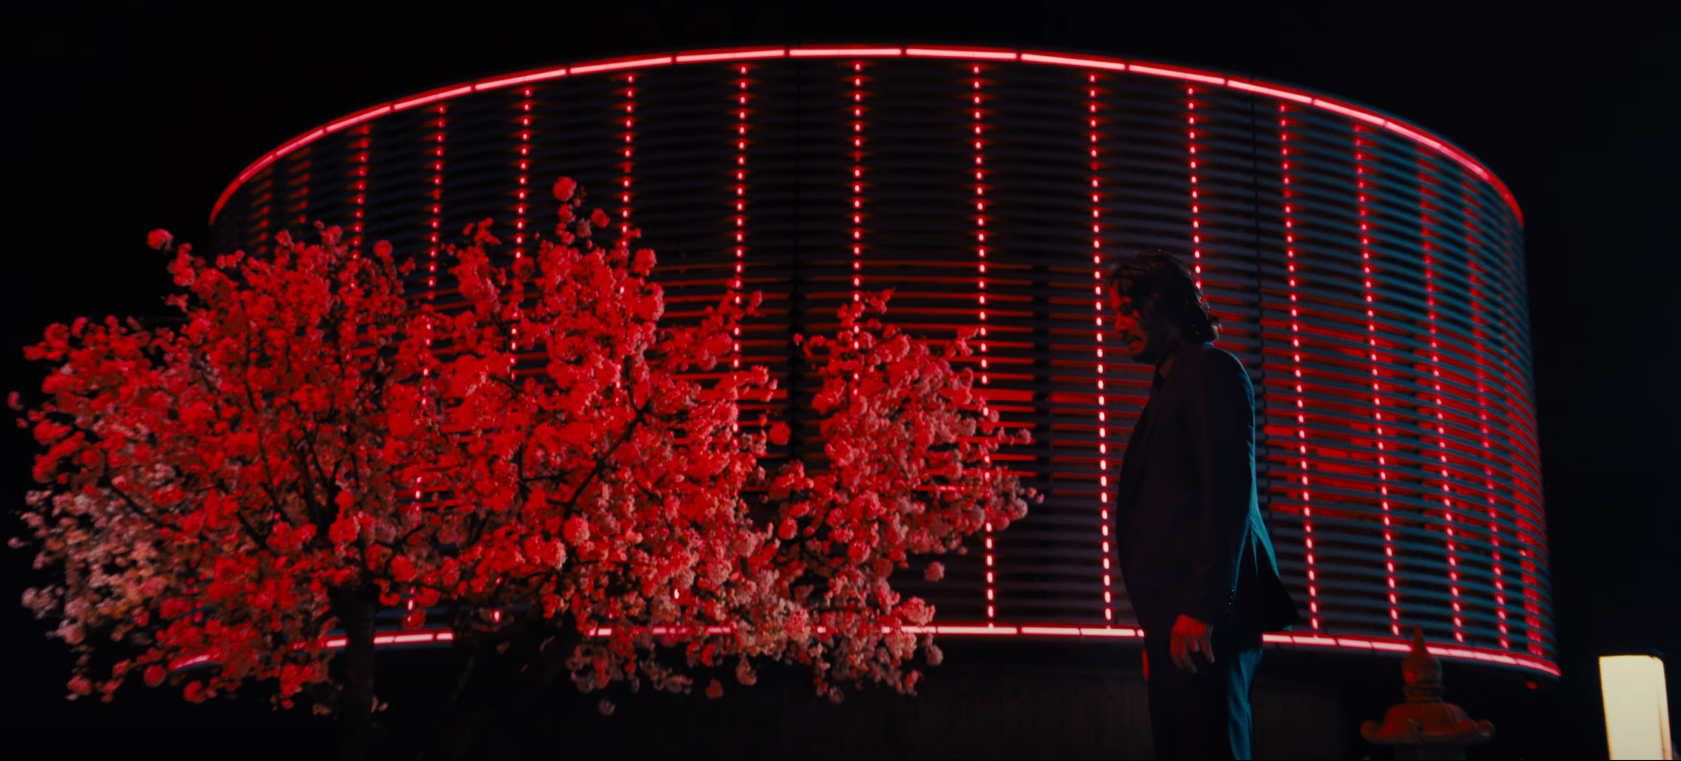 John Wick: Chapter 4 (2023 Movie) Official Trailer – Keanu Reeves, Donnie  Yen, Bill Skarsgård 